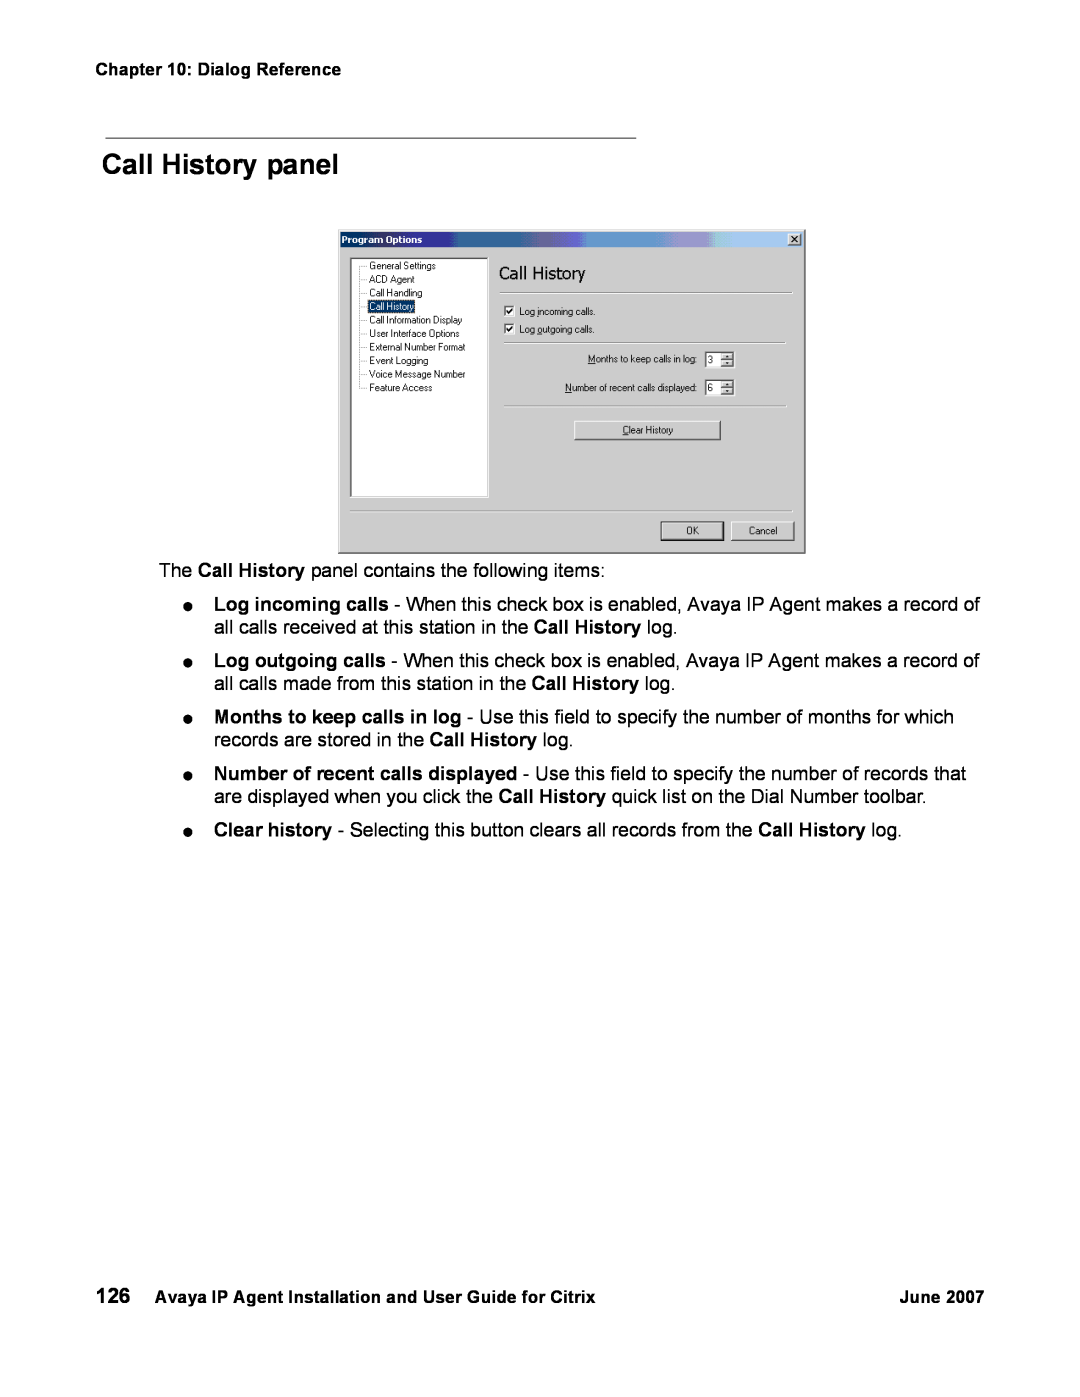 Avaya 7 manual Call History panel 